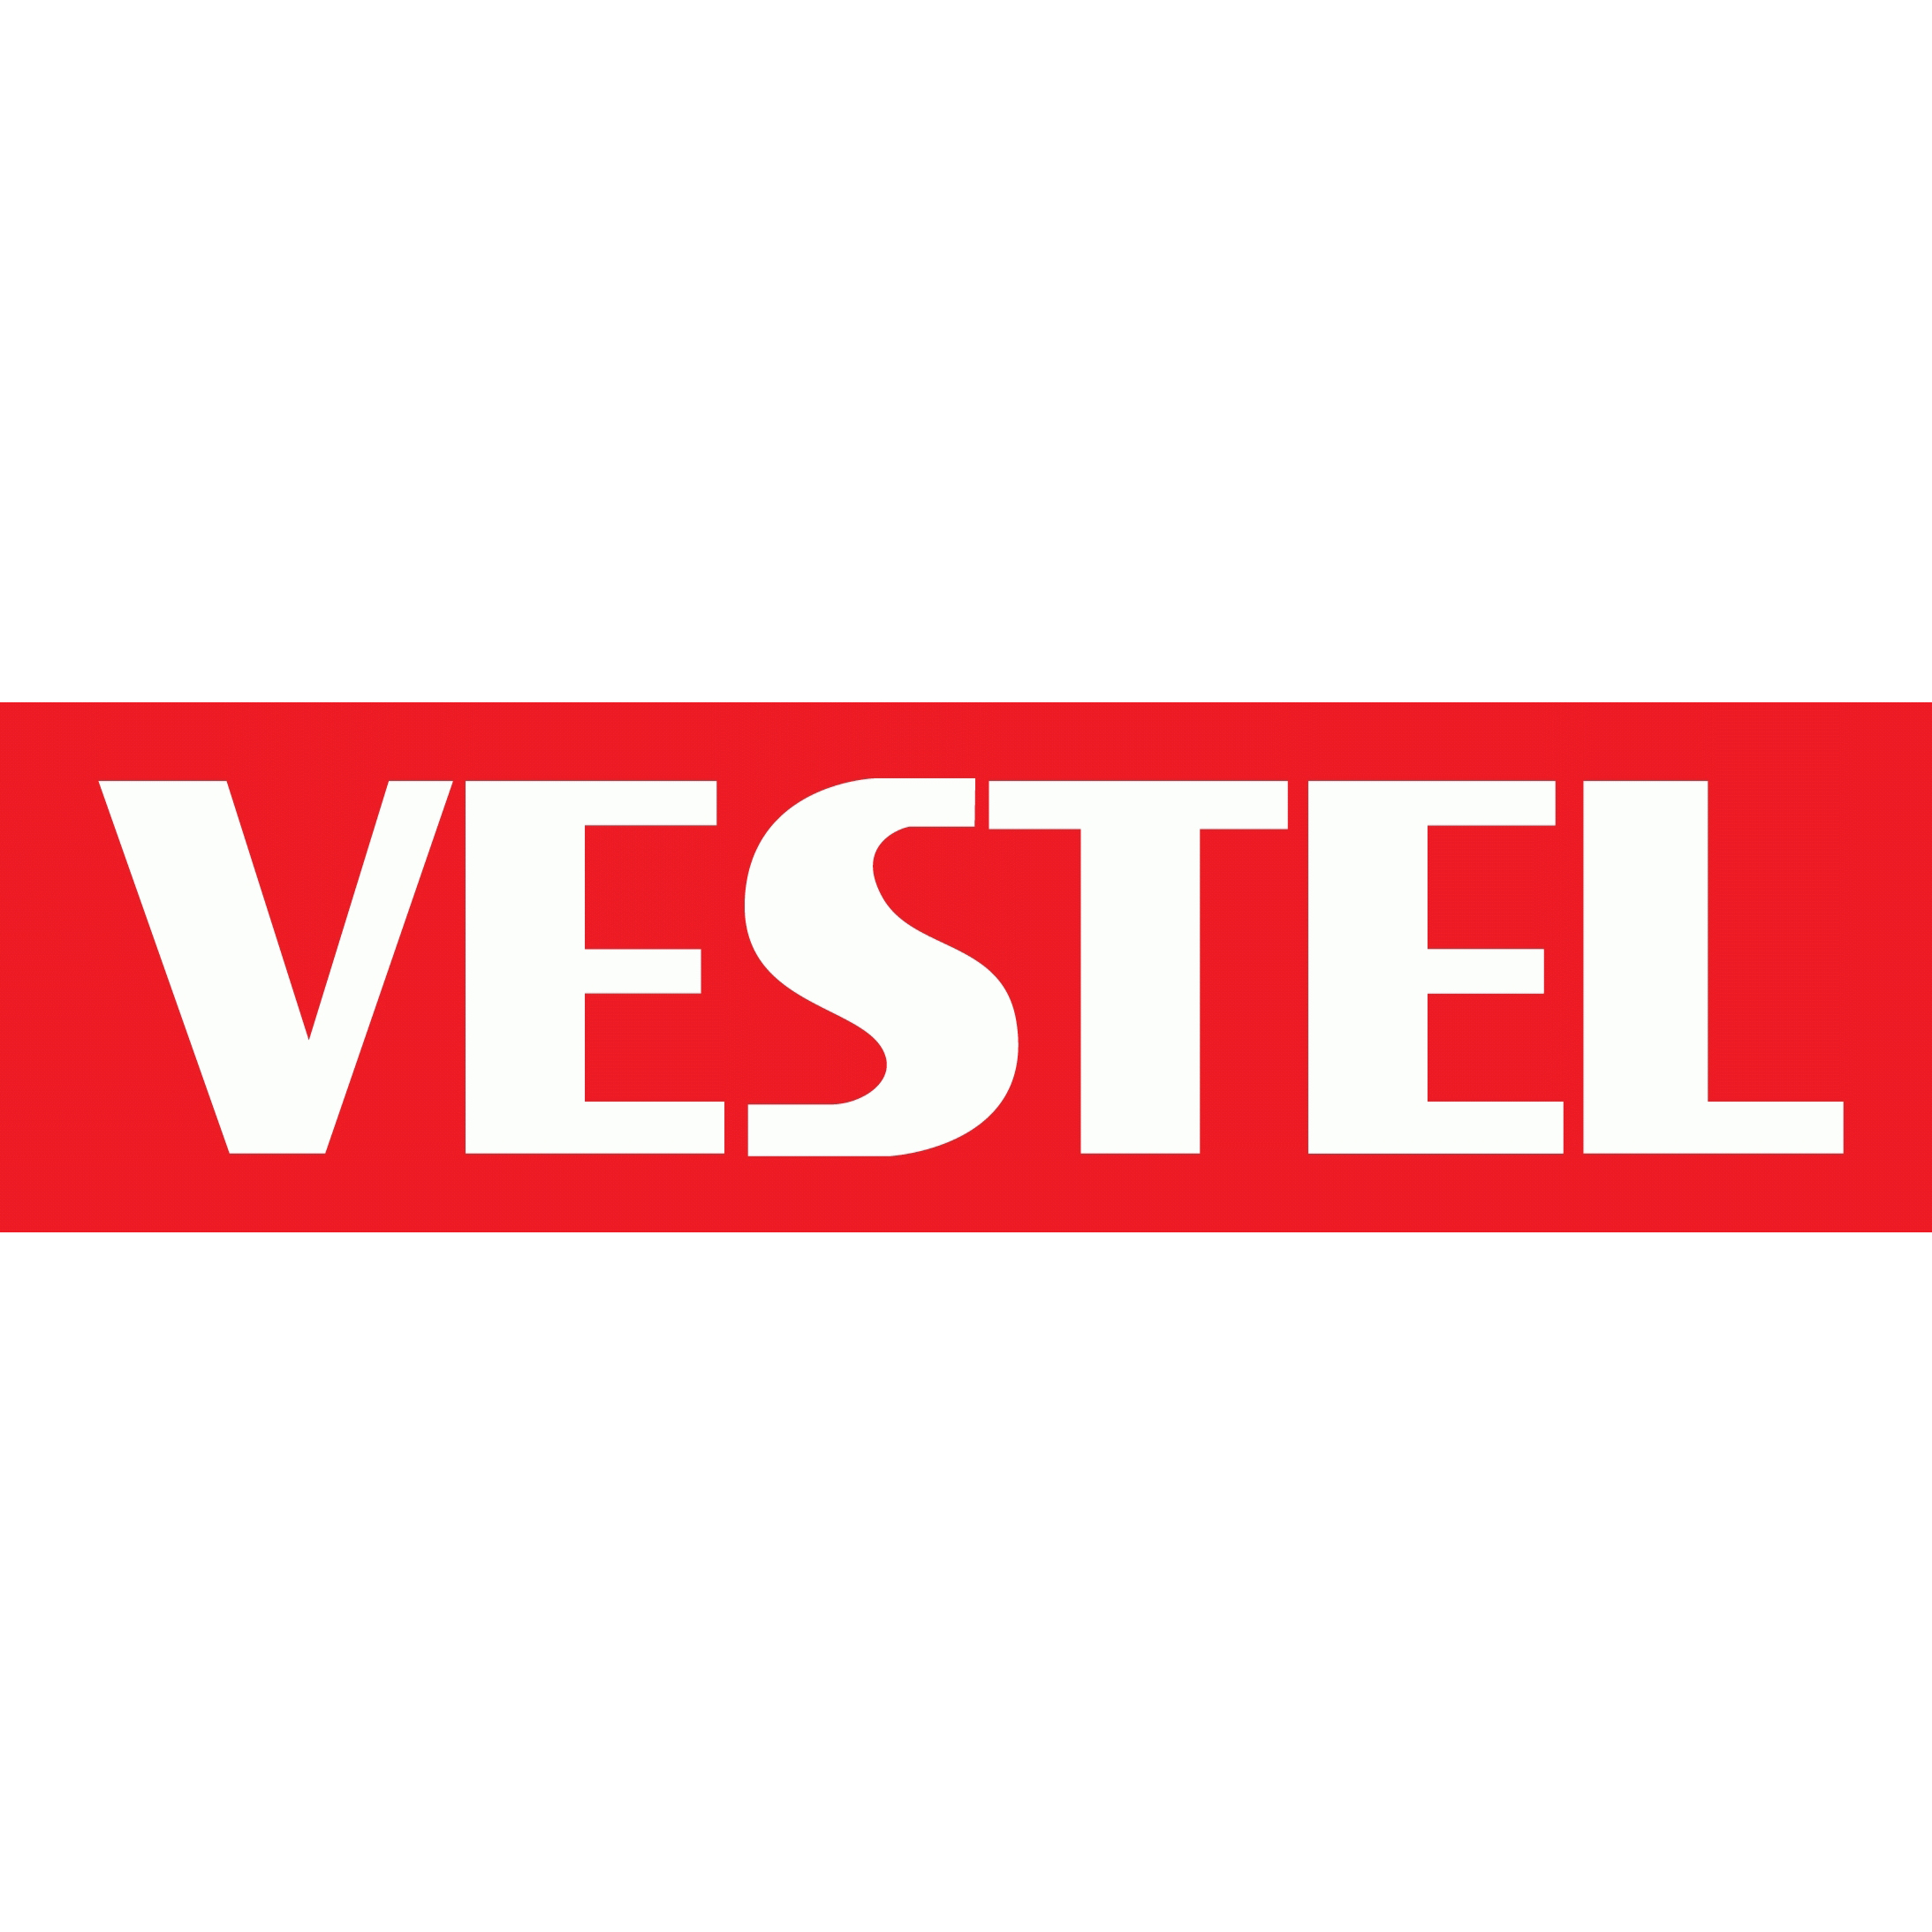  Vestel